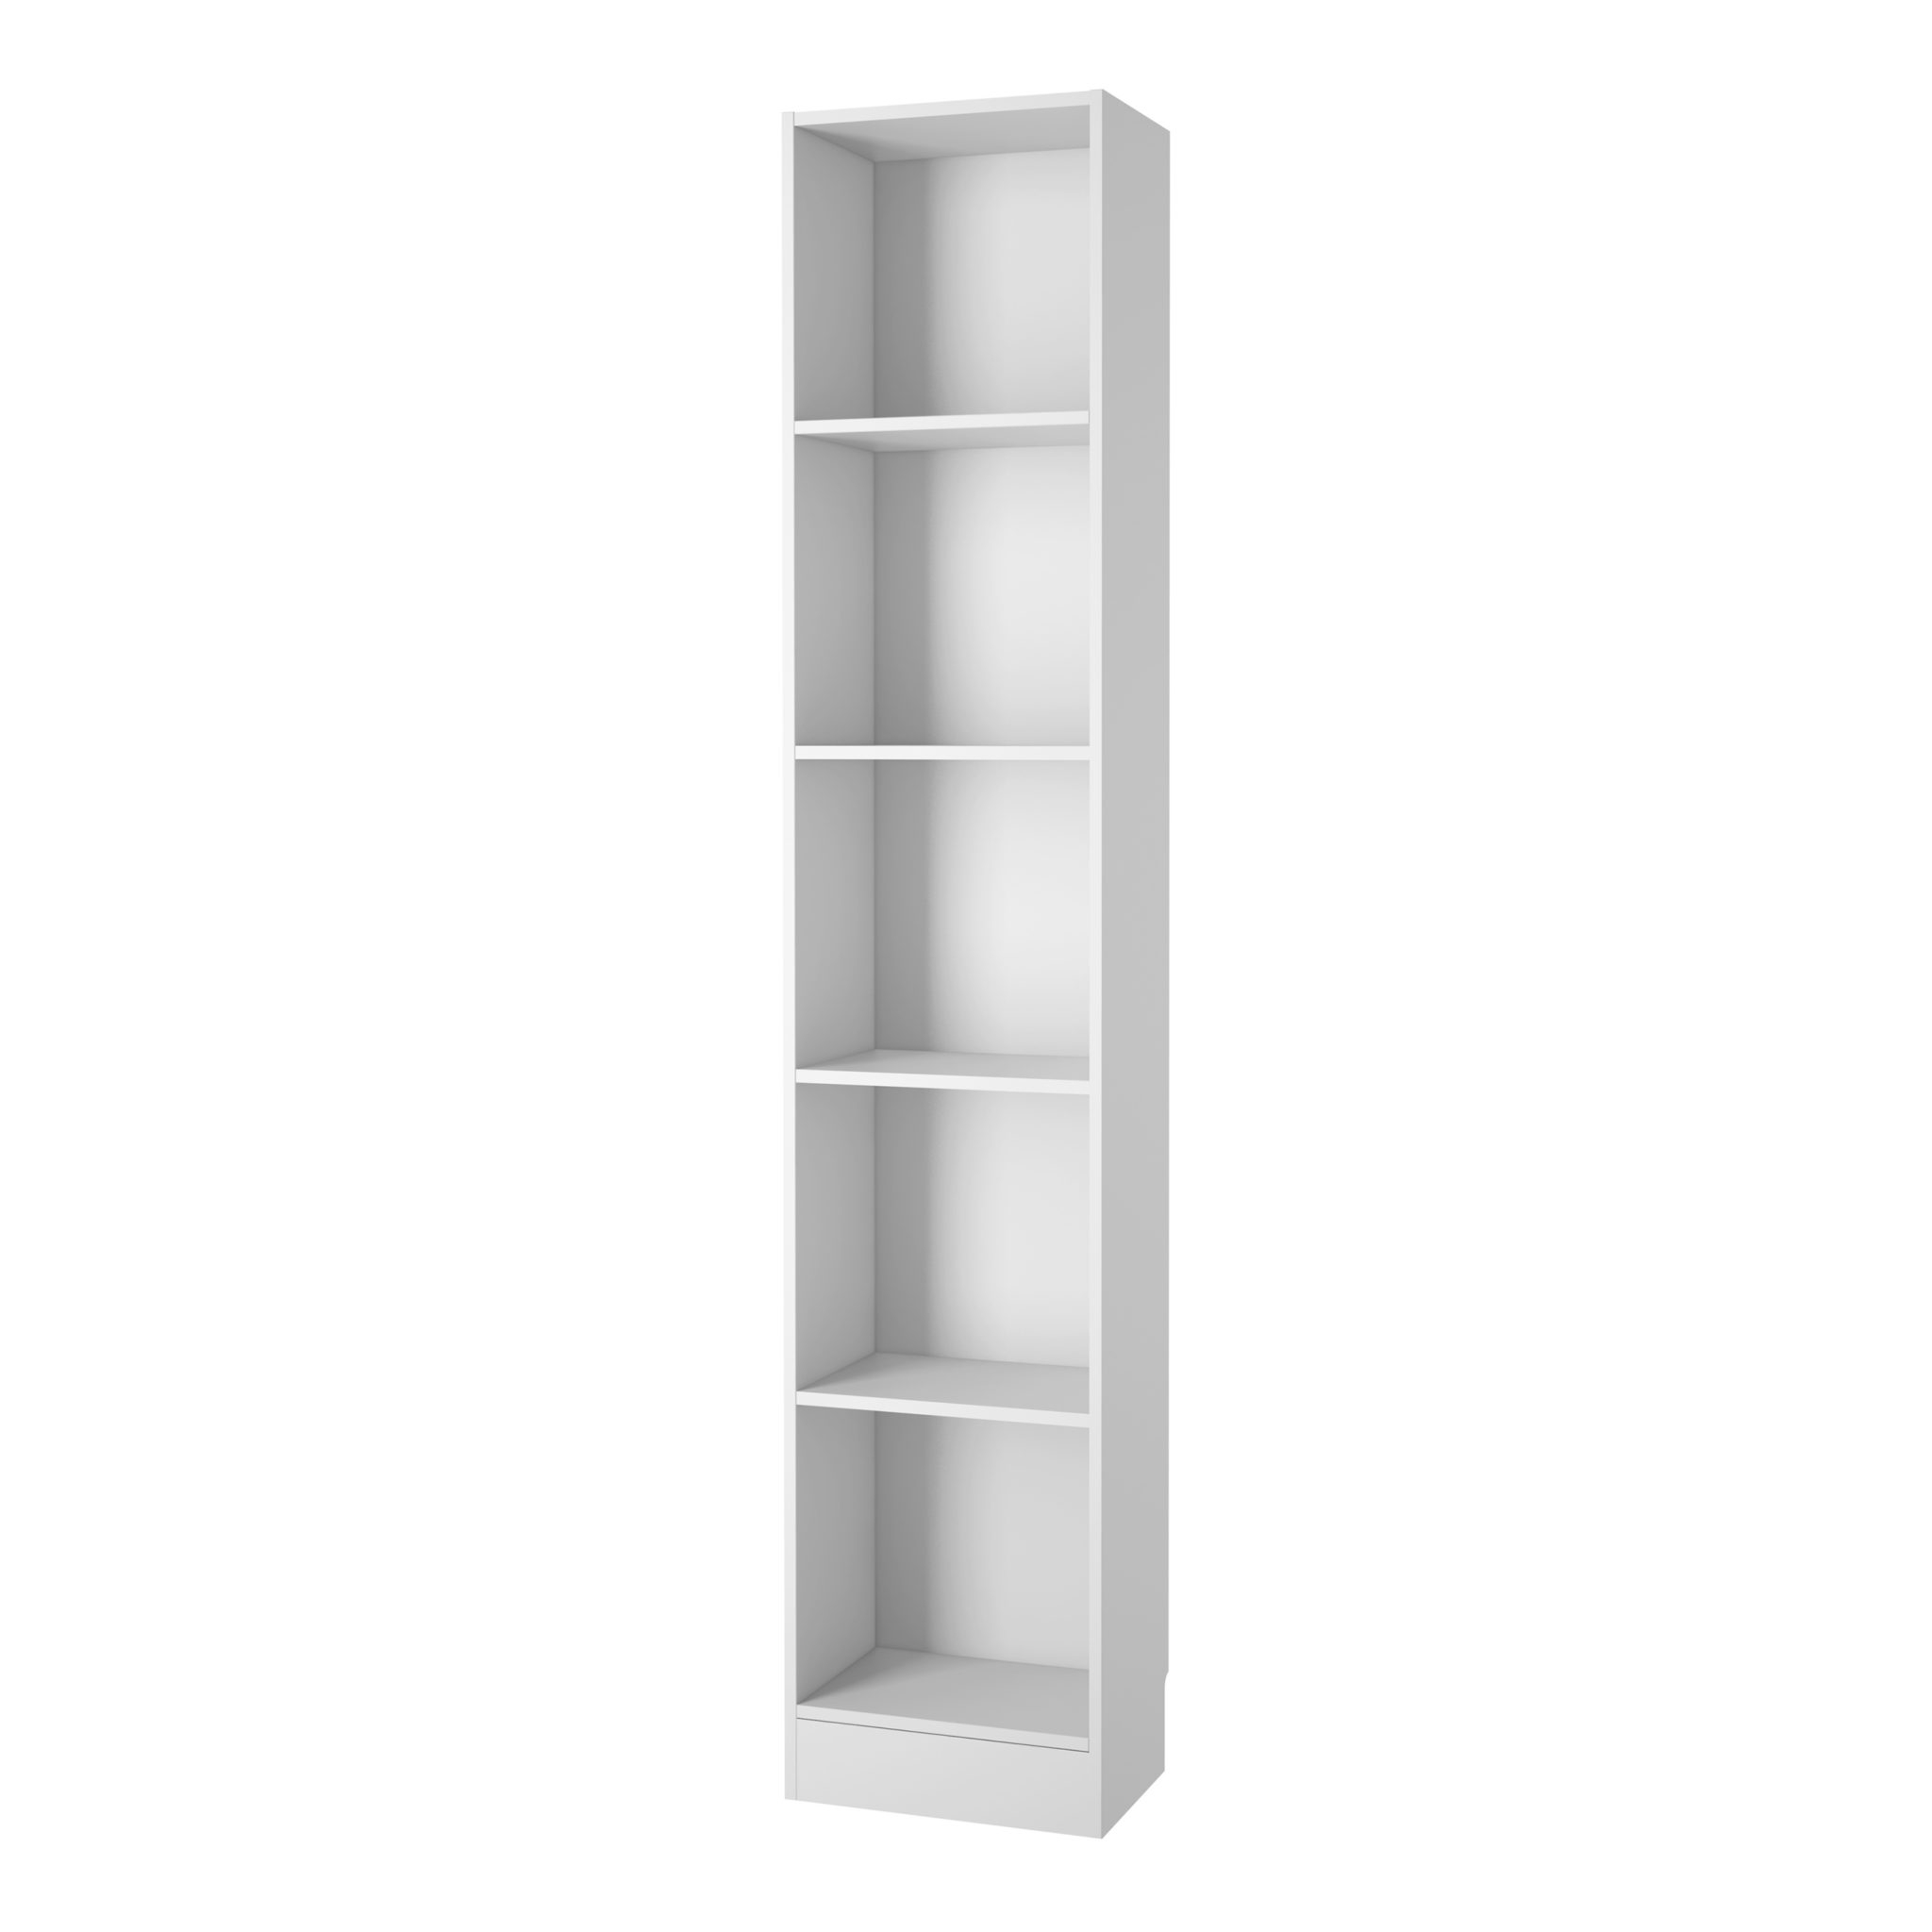 Duday Tall Narrow Bookcase 4 Shelves In White Netfurniture regarding sizing 2048 X 2048